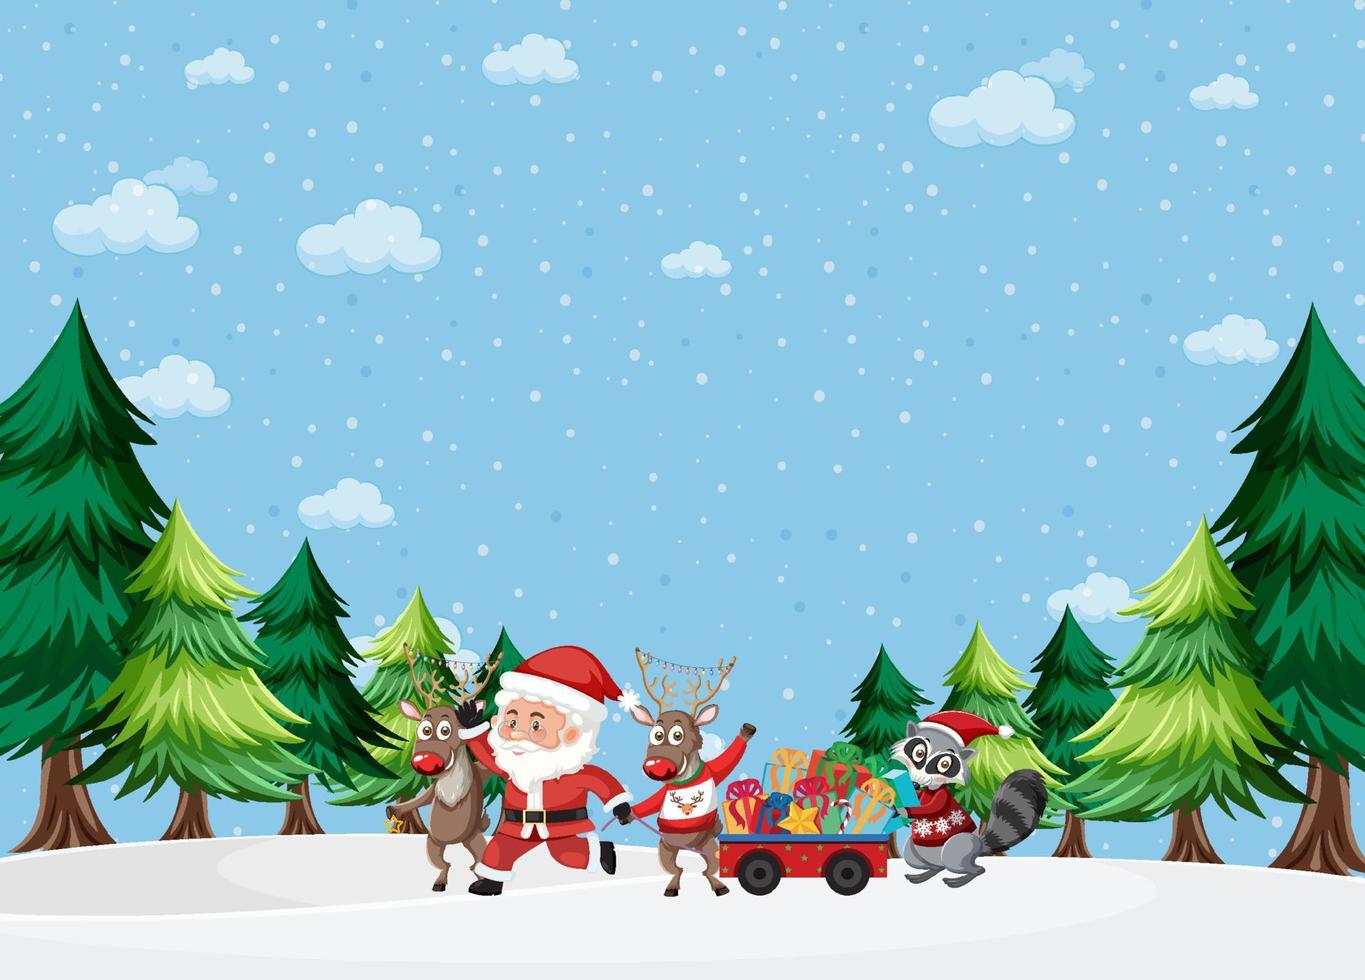 Christmas theme with Santa and reindeers vector